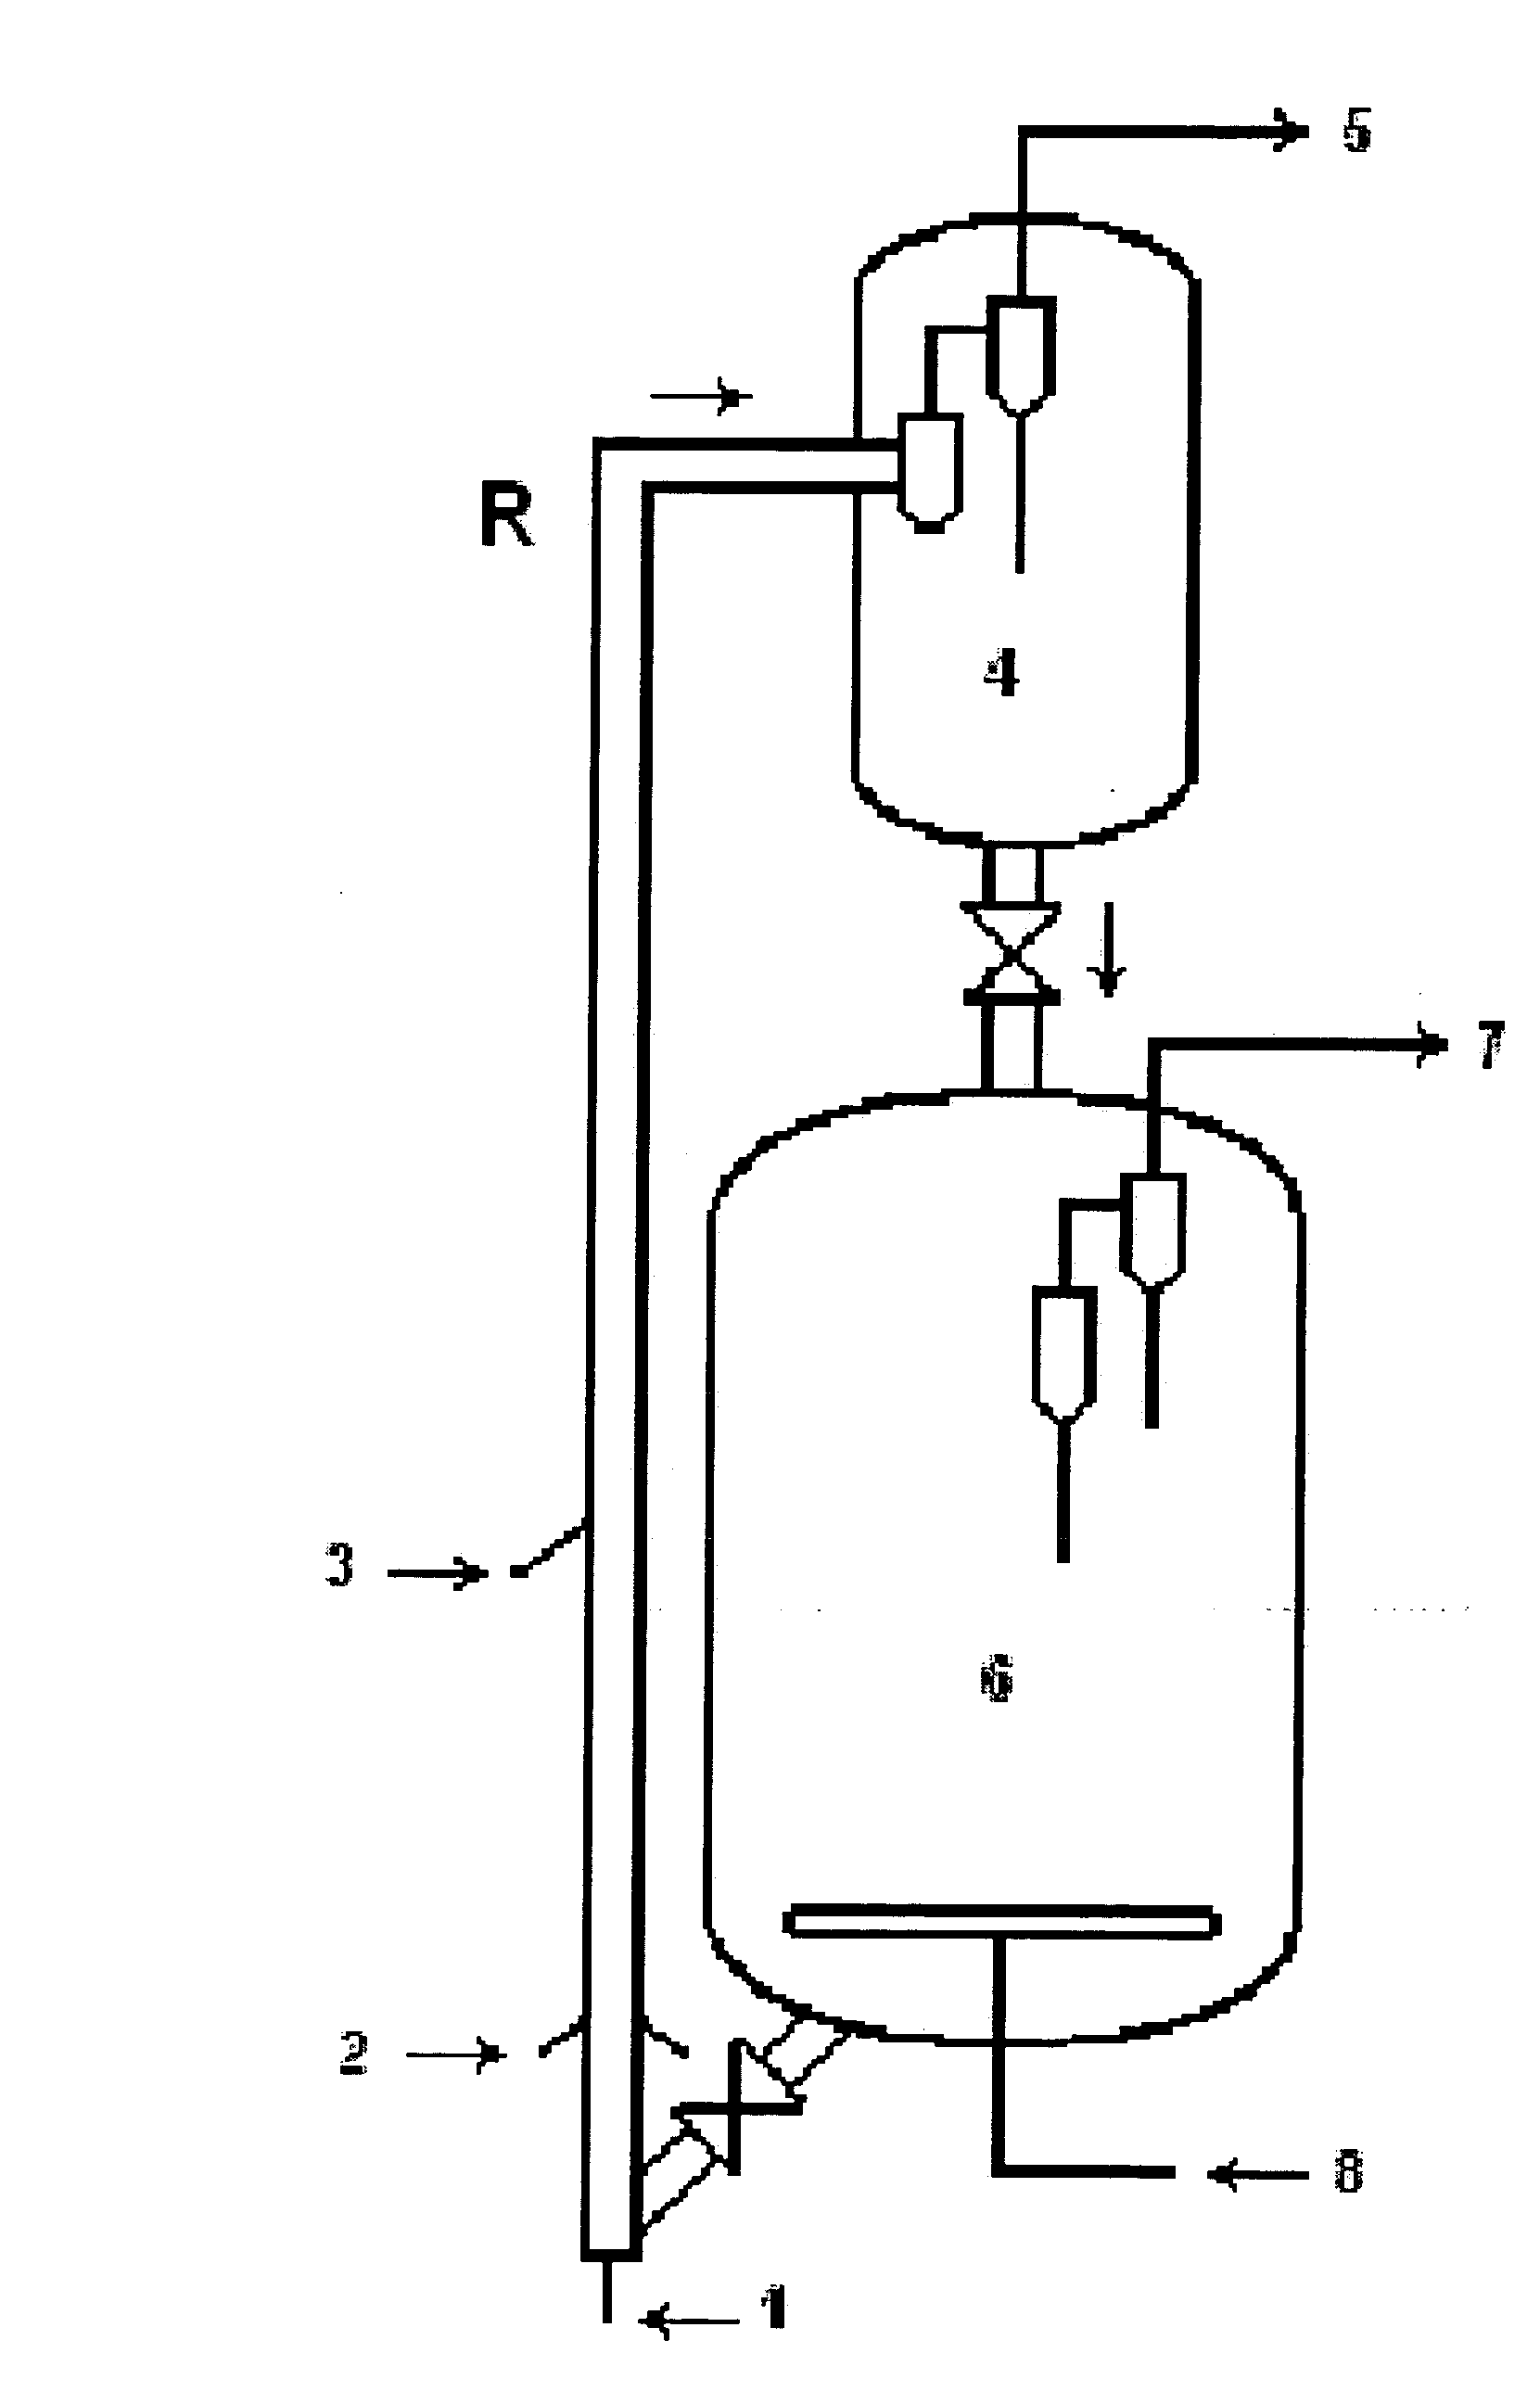 FCC process for the maximization of medium distillates